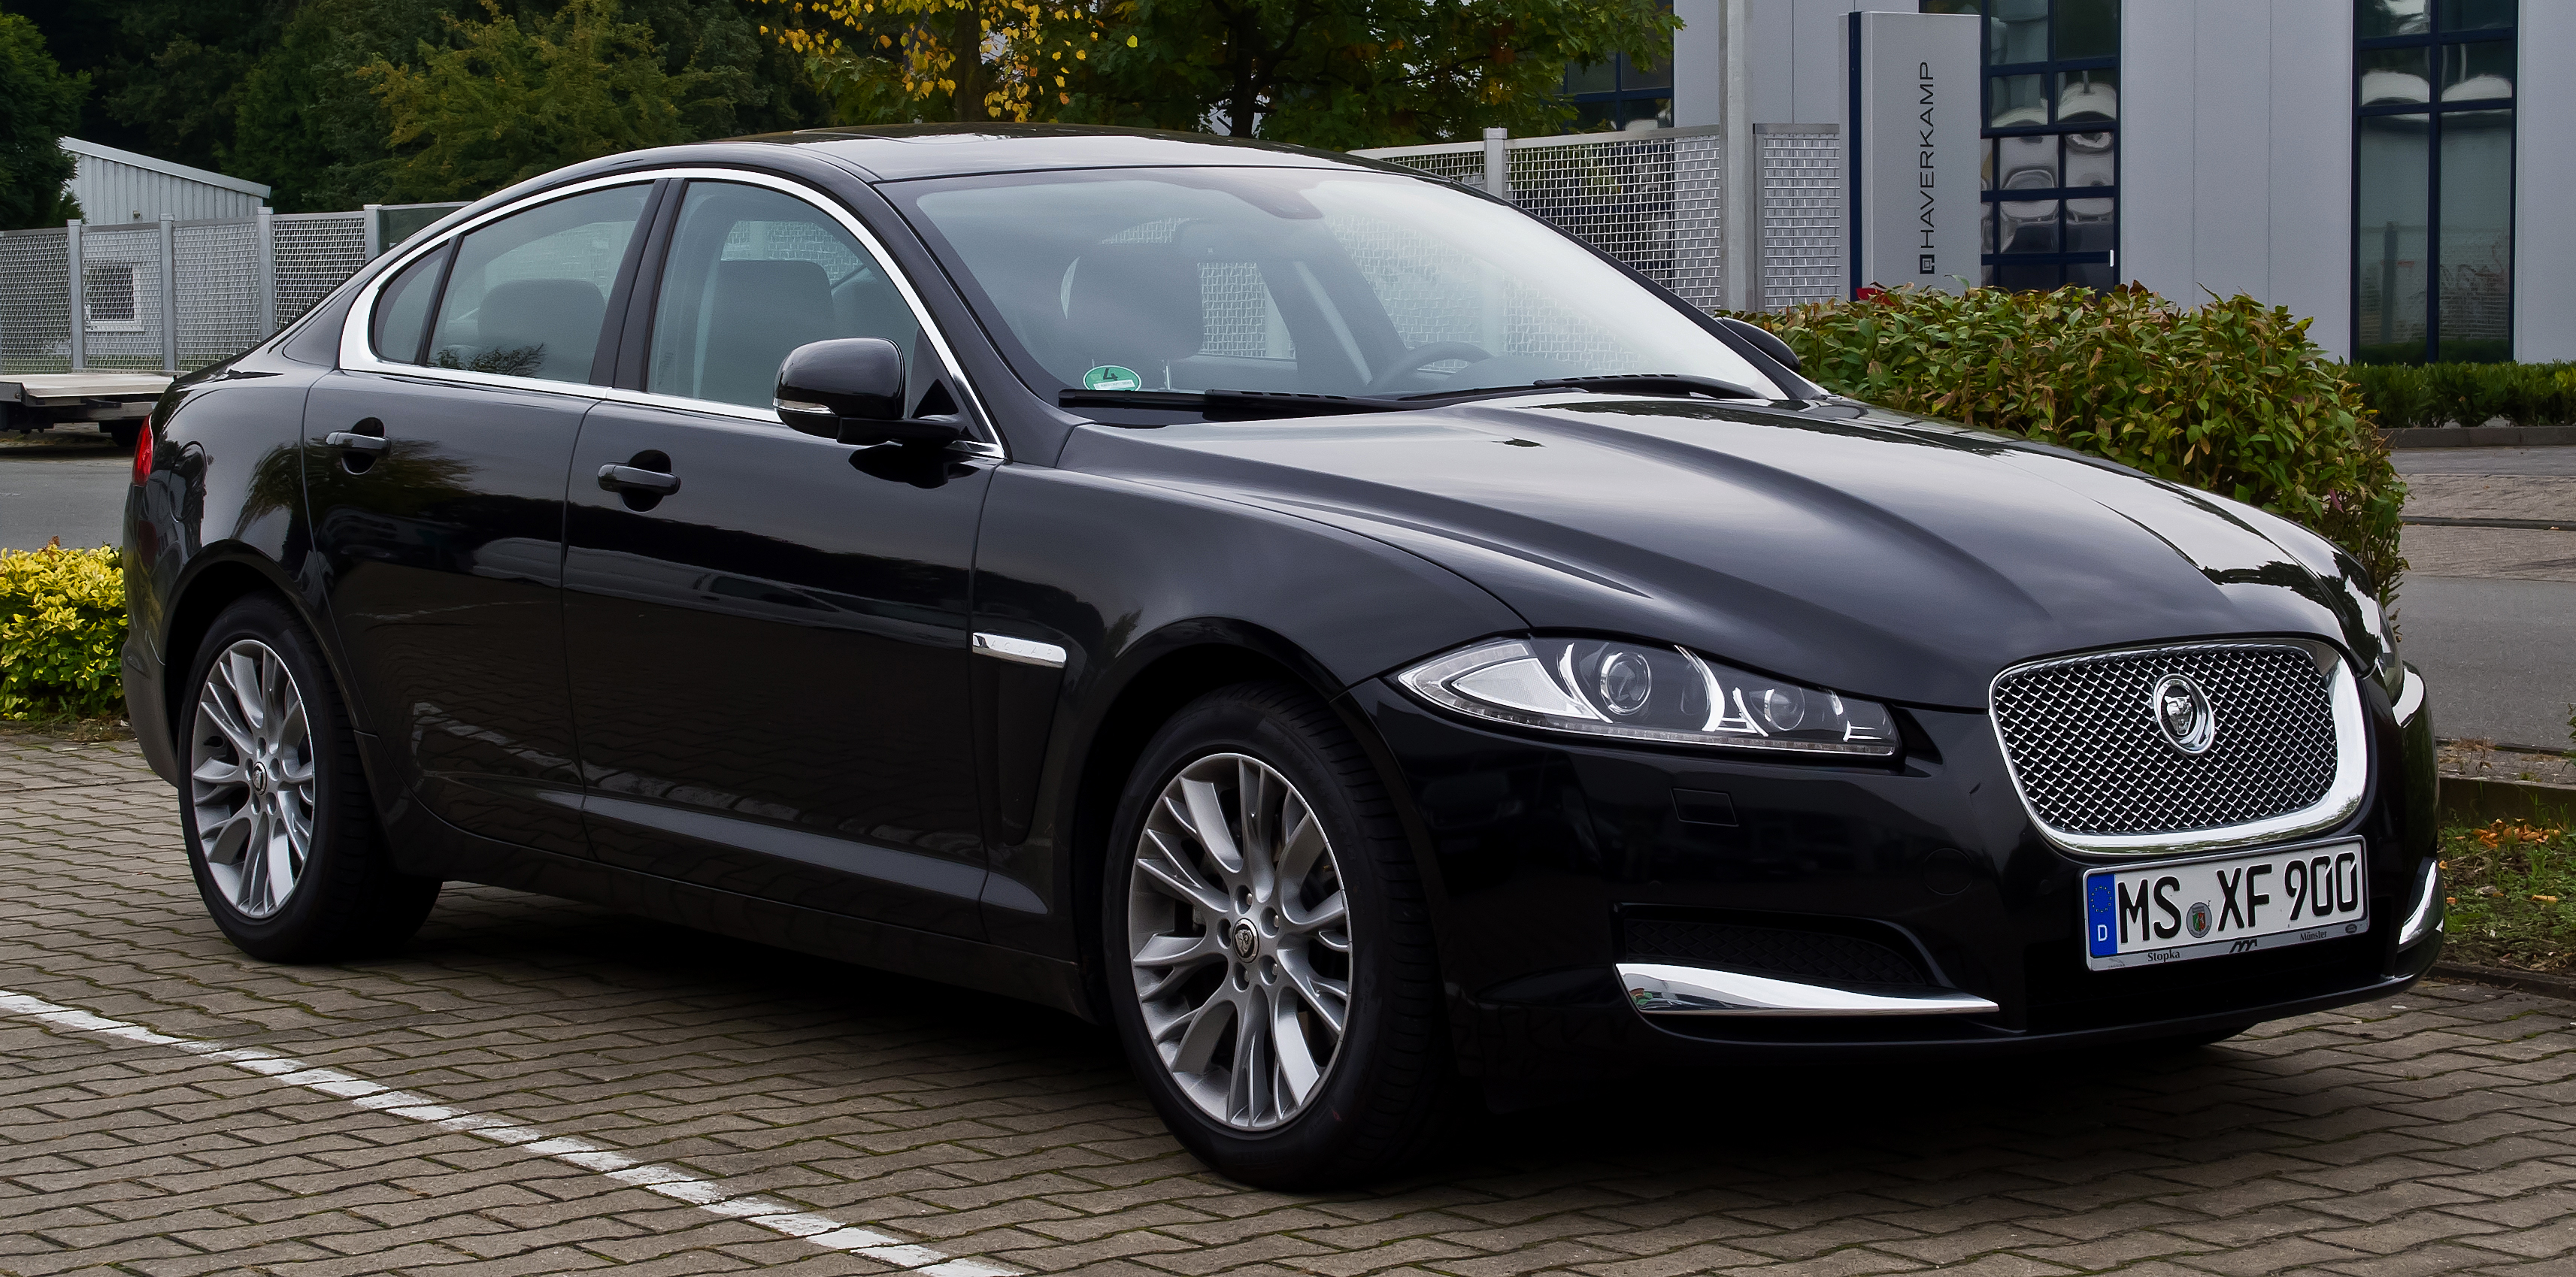 Dosya:Jaguar XF 2.2 D (Facelift) – Frontansicht, 5. Oktober 2013, Münster.jpg - Vikipedi